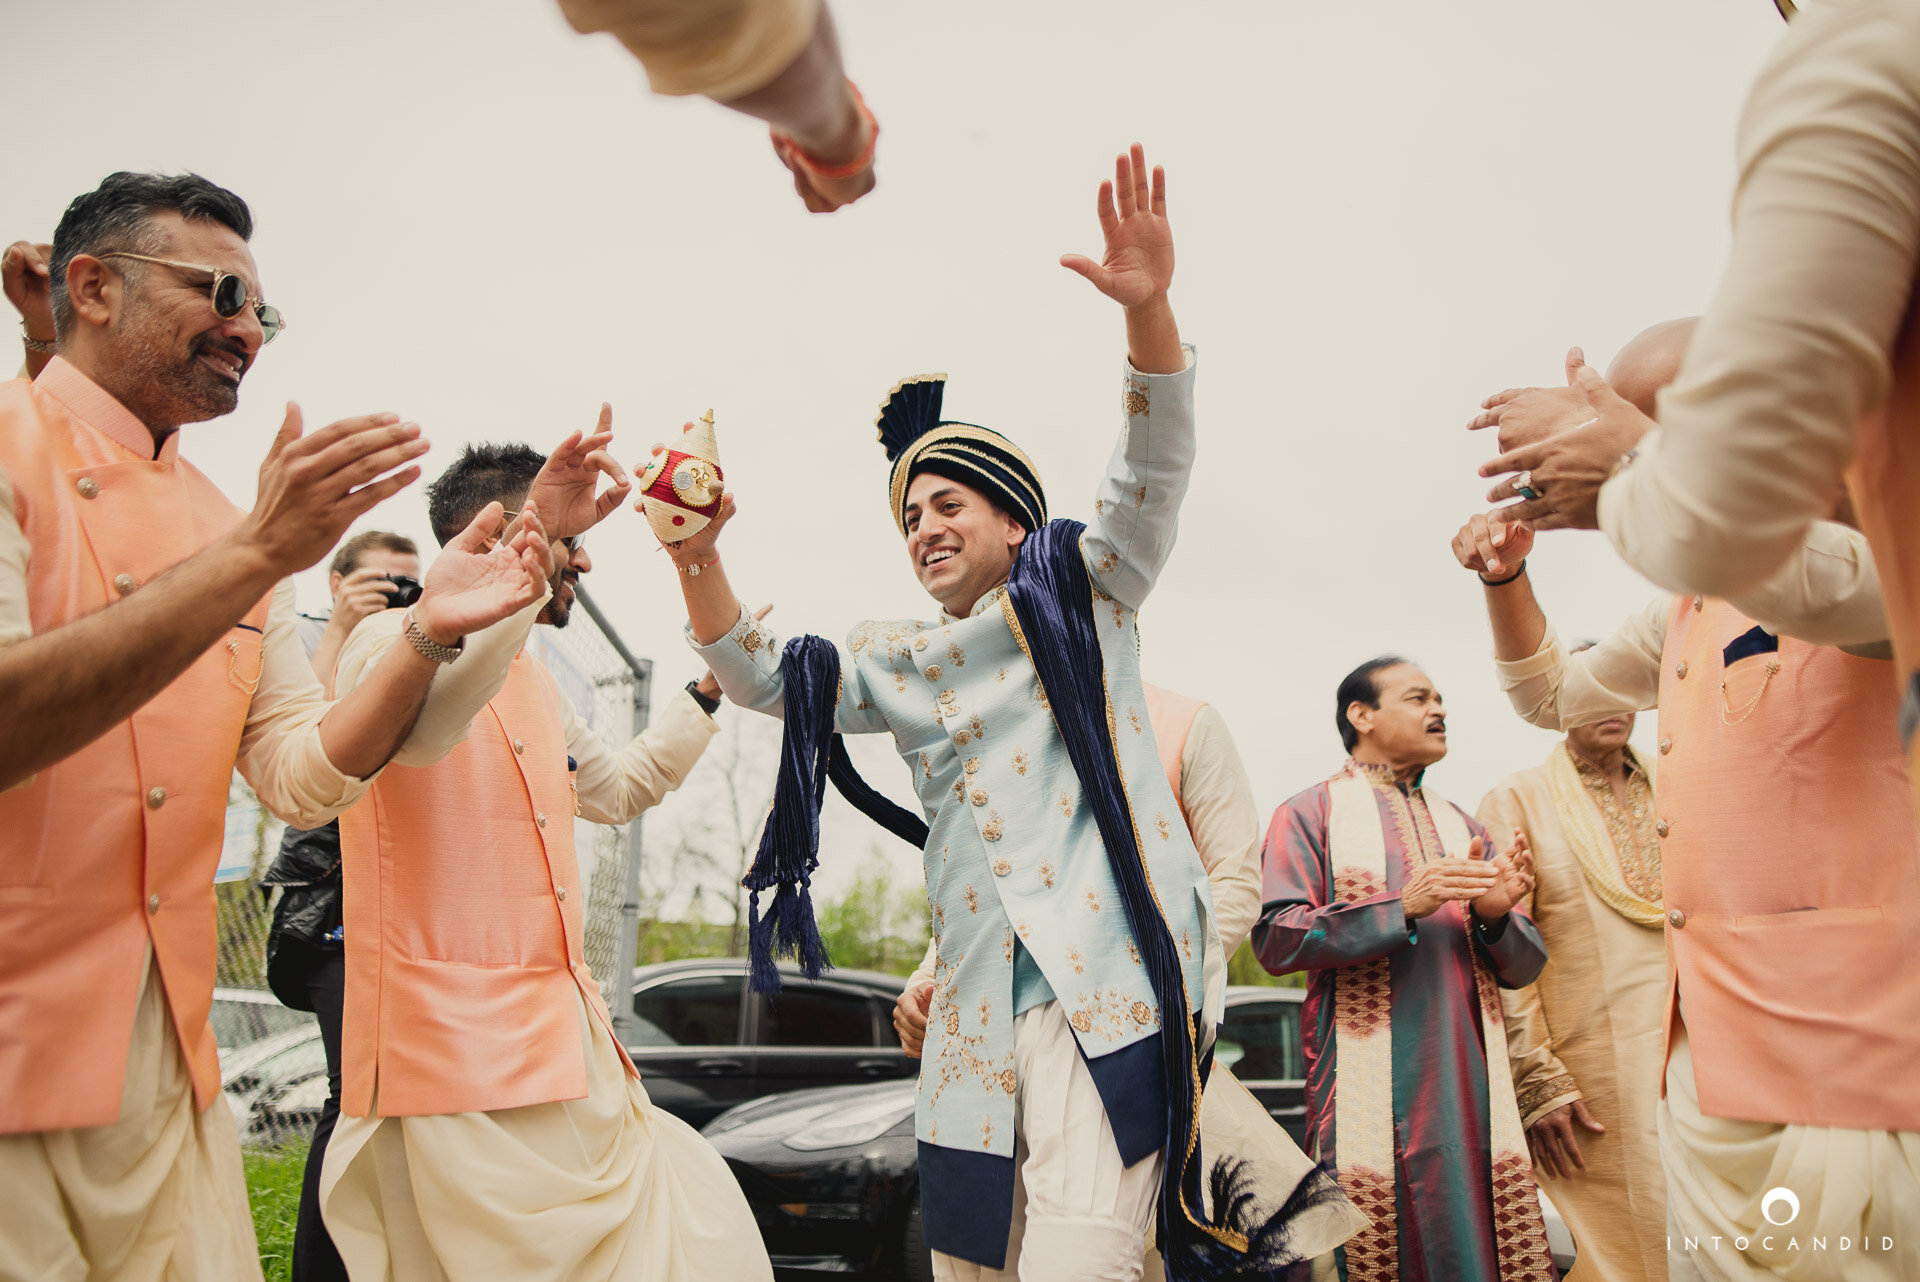 Chicago_Indian_Wedding_Photographer_Intocandid_Photography_Ketan & Manasvi_19.JPG